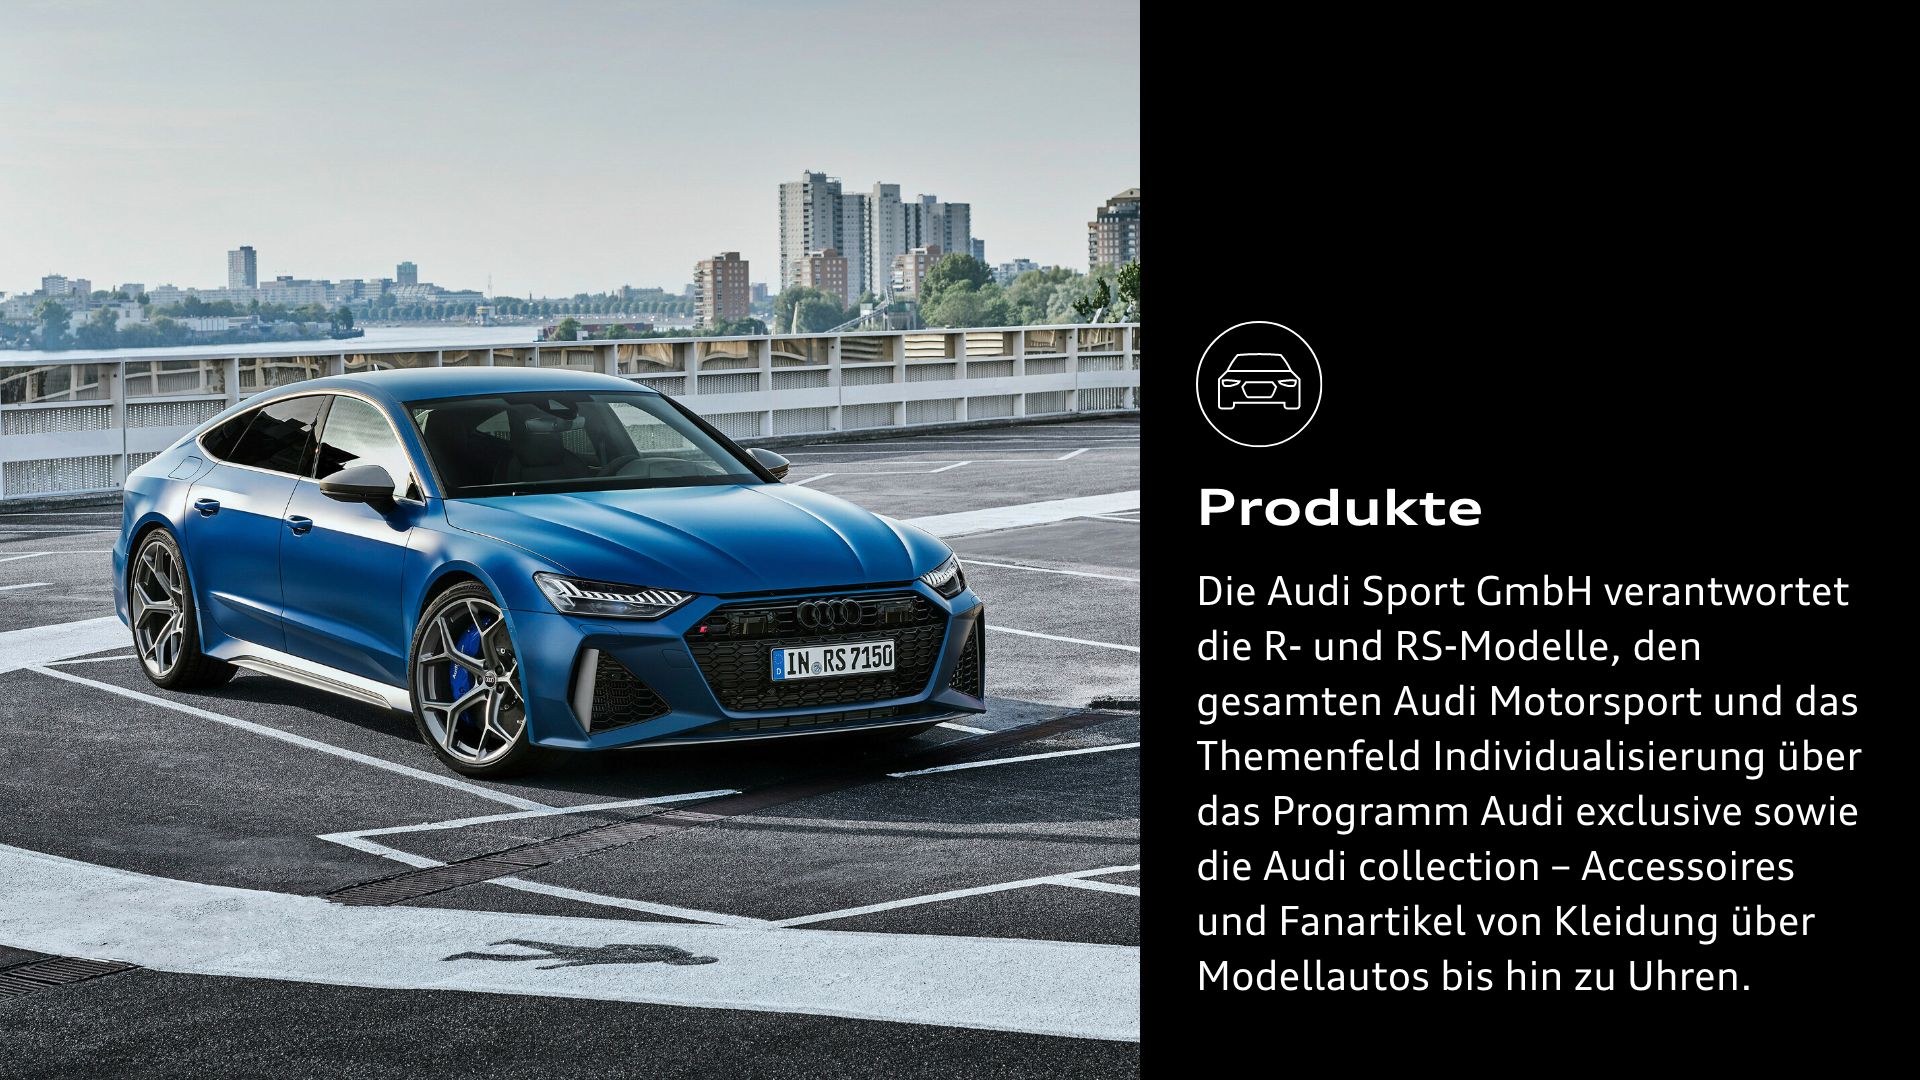 https://www.audi.com/content/dam/gbp2/sport/motorsport/audi-motorsport/AR22_Desktop-Slider-1-Audi-Sport_1920x1080%20%E2%80%93%203-Produkte.jpg?imwidth=1920&imdensity=1